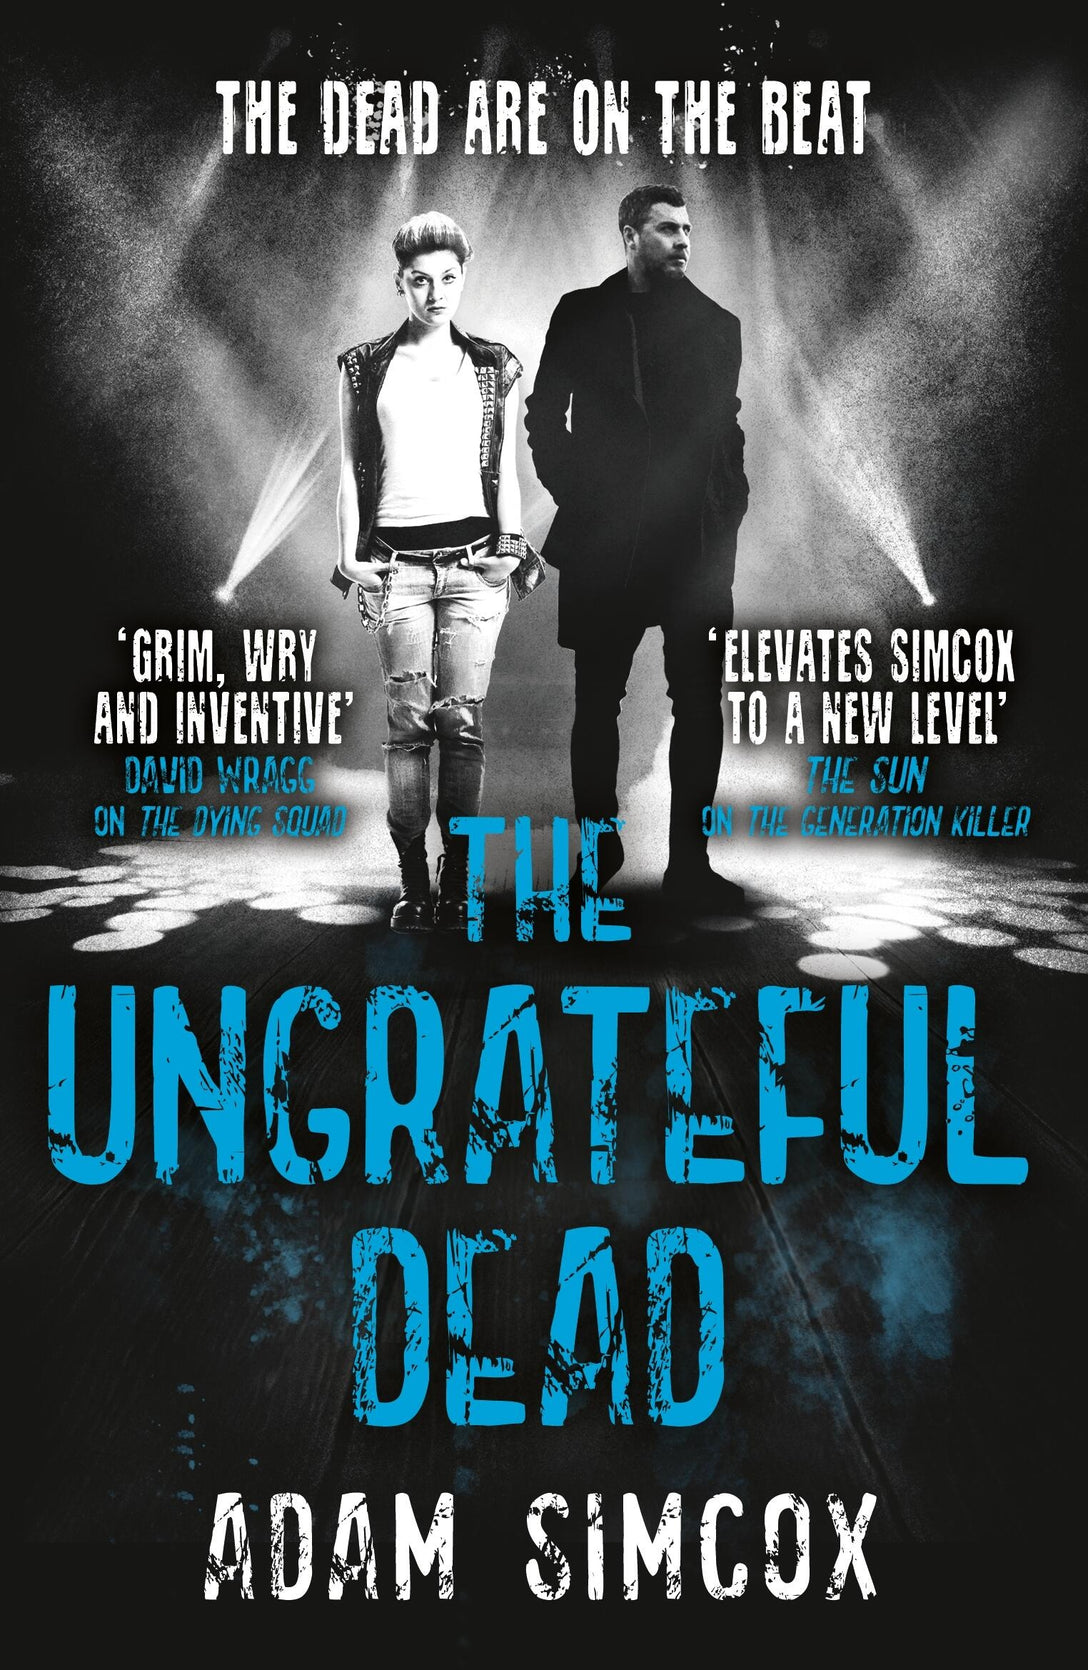 The Ungrateful Dead by Adam Simcox